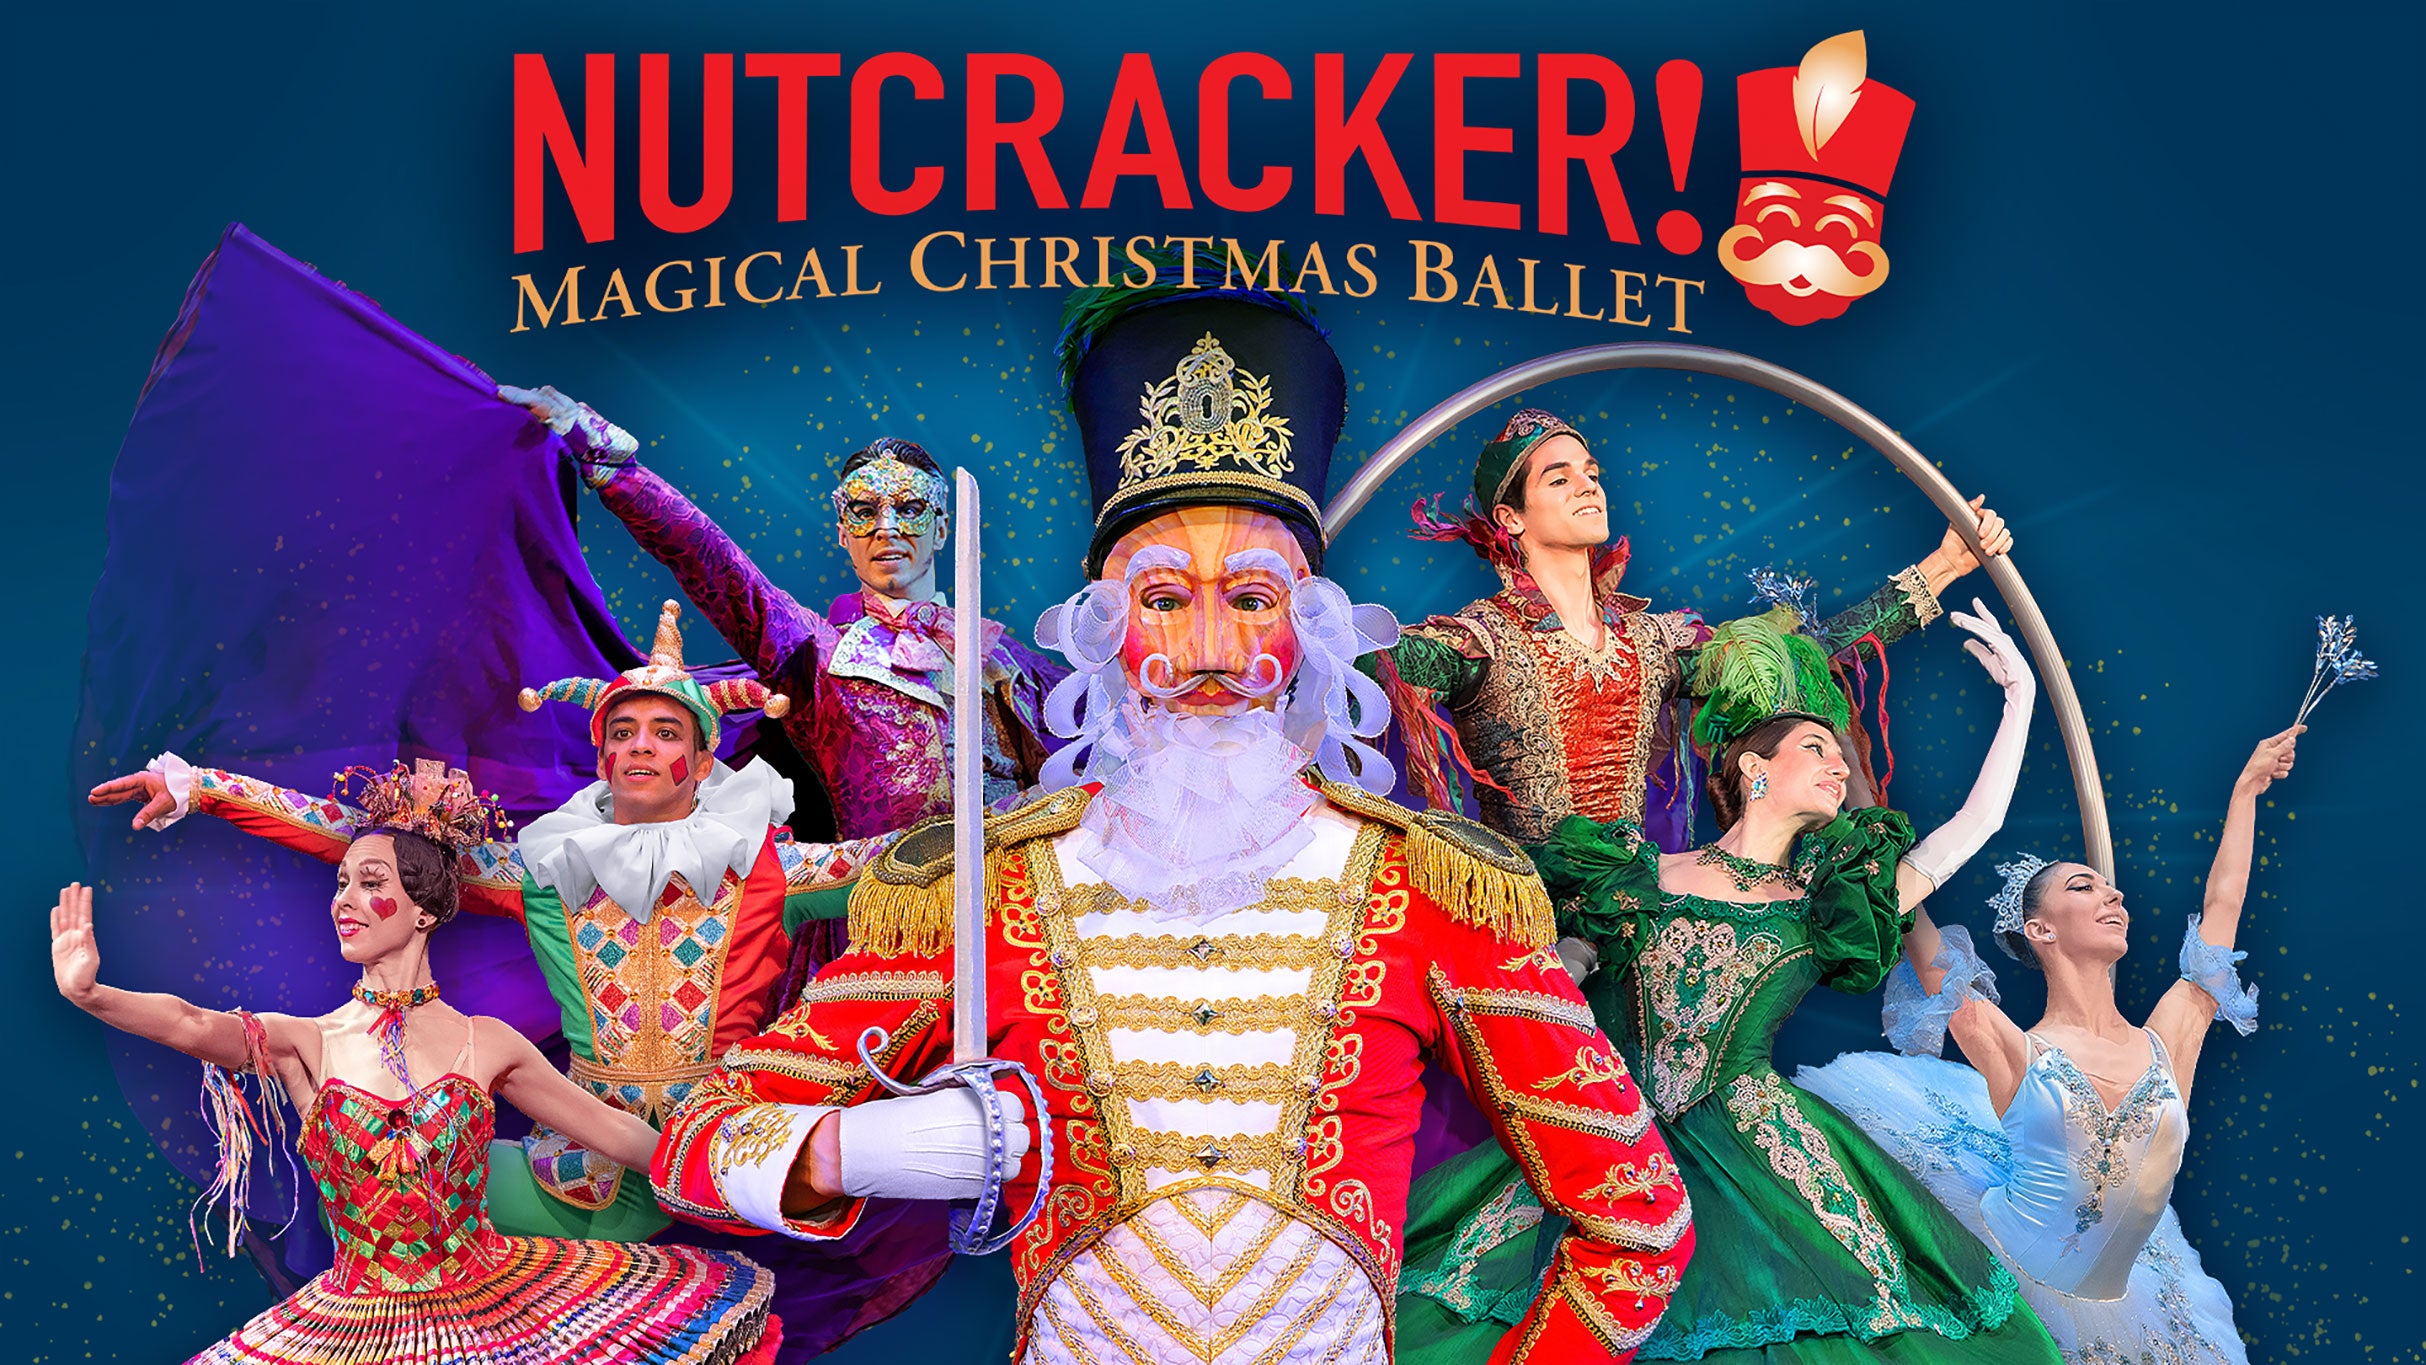 NUTCRACKER! Magical Christmas Ballet at Crown Theatre